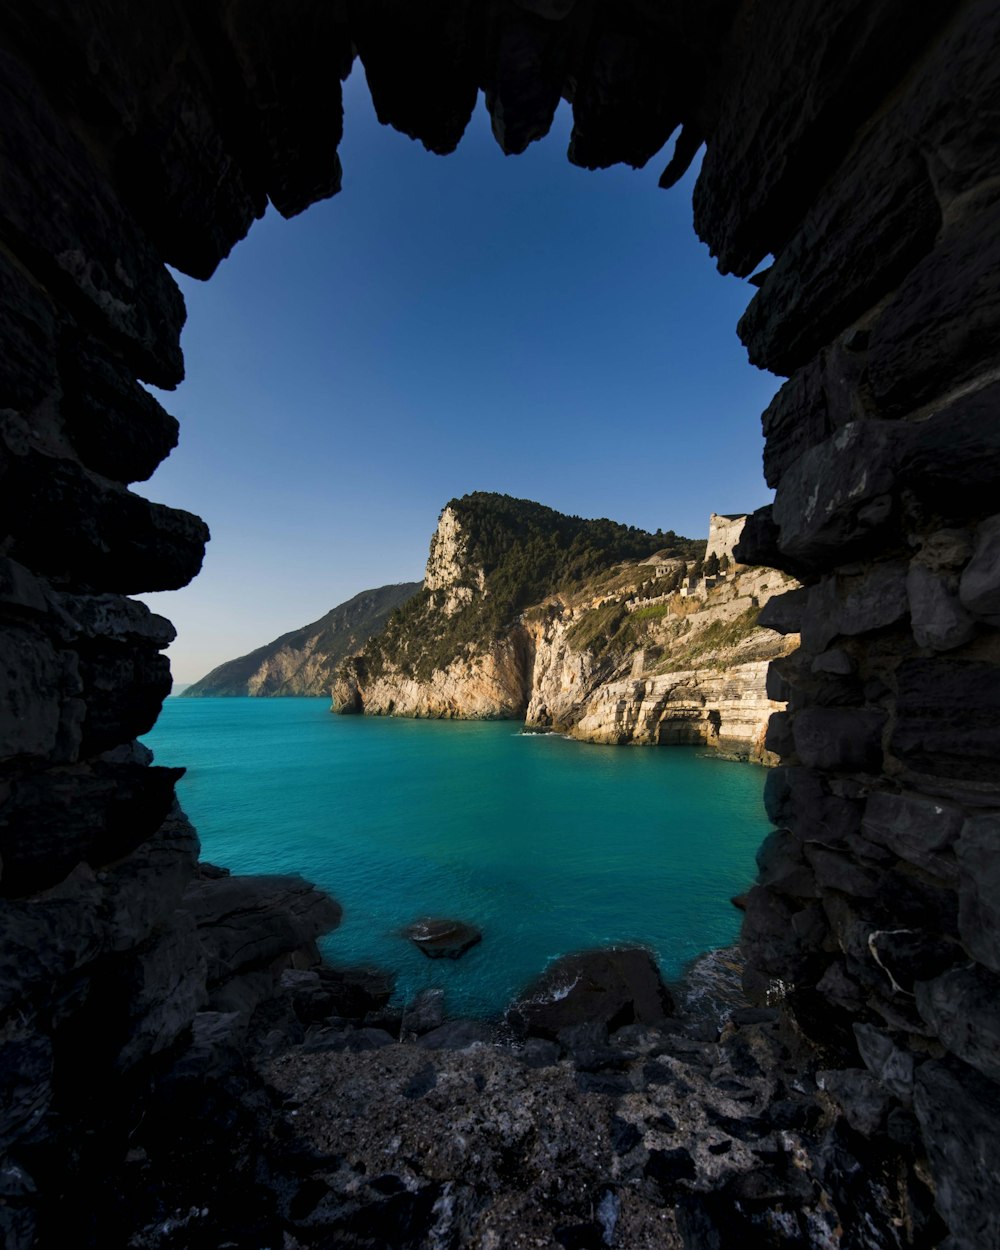 a view of a blue sea through a cave